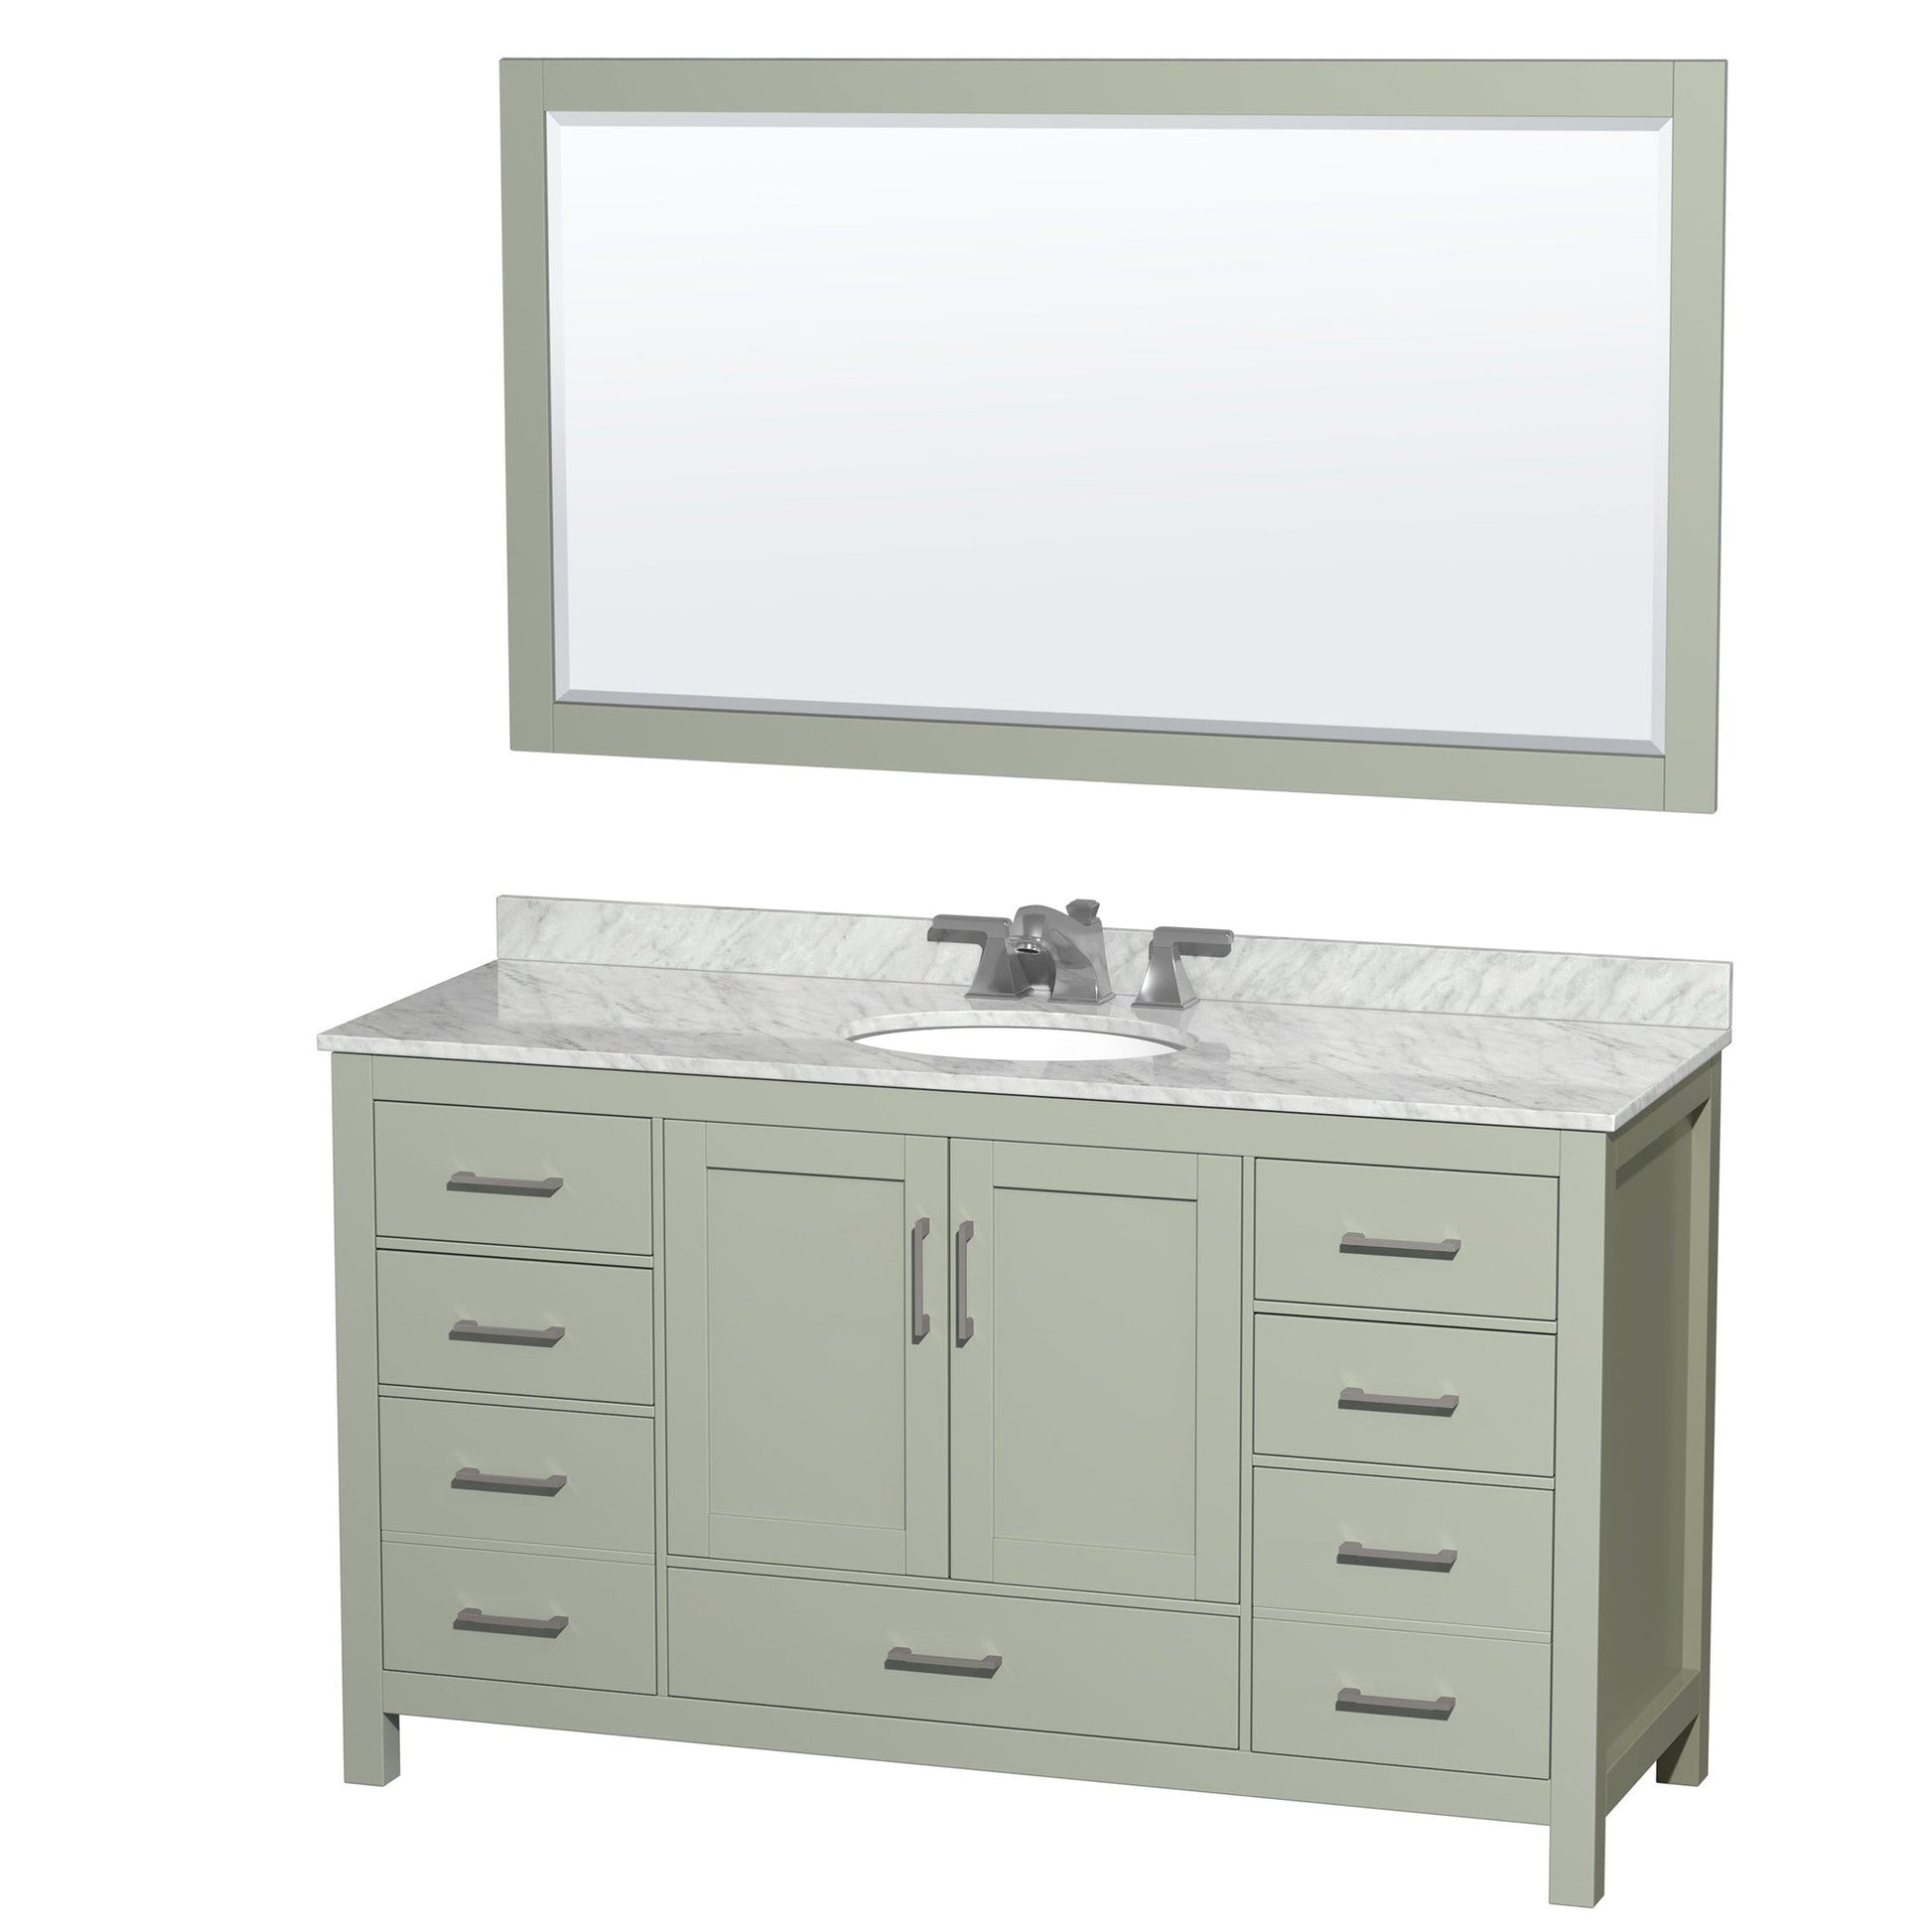 Sheffield 60" Single Bathroom Vanity in Light Green, White Carrara Marble Countertop, Undermount Oval Sink, Brushed Nickel Trim, 58" Mirror